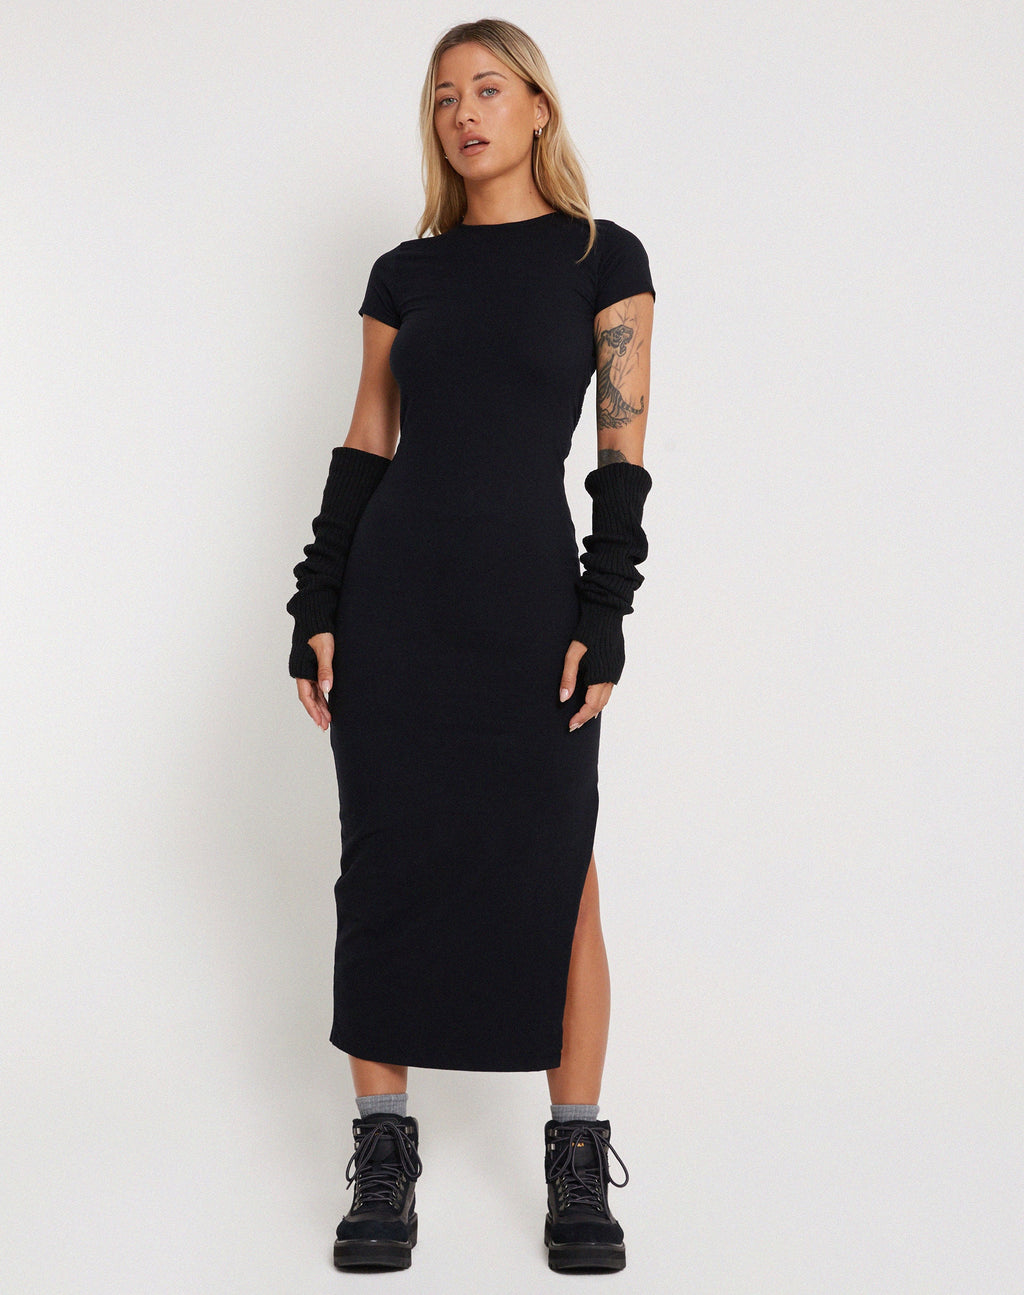 Kasor Short Sleeve Maxi Dress in Black